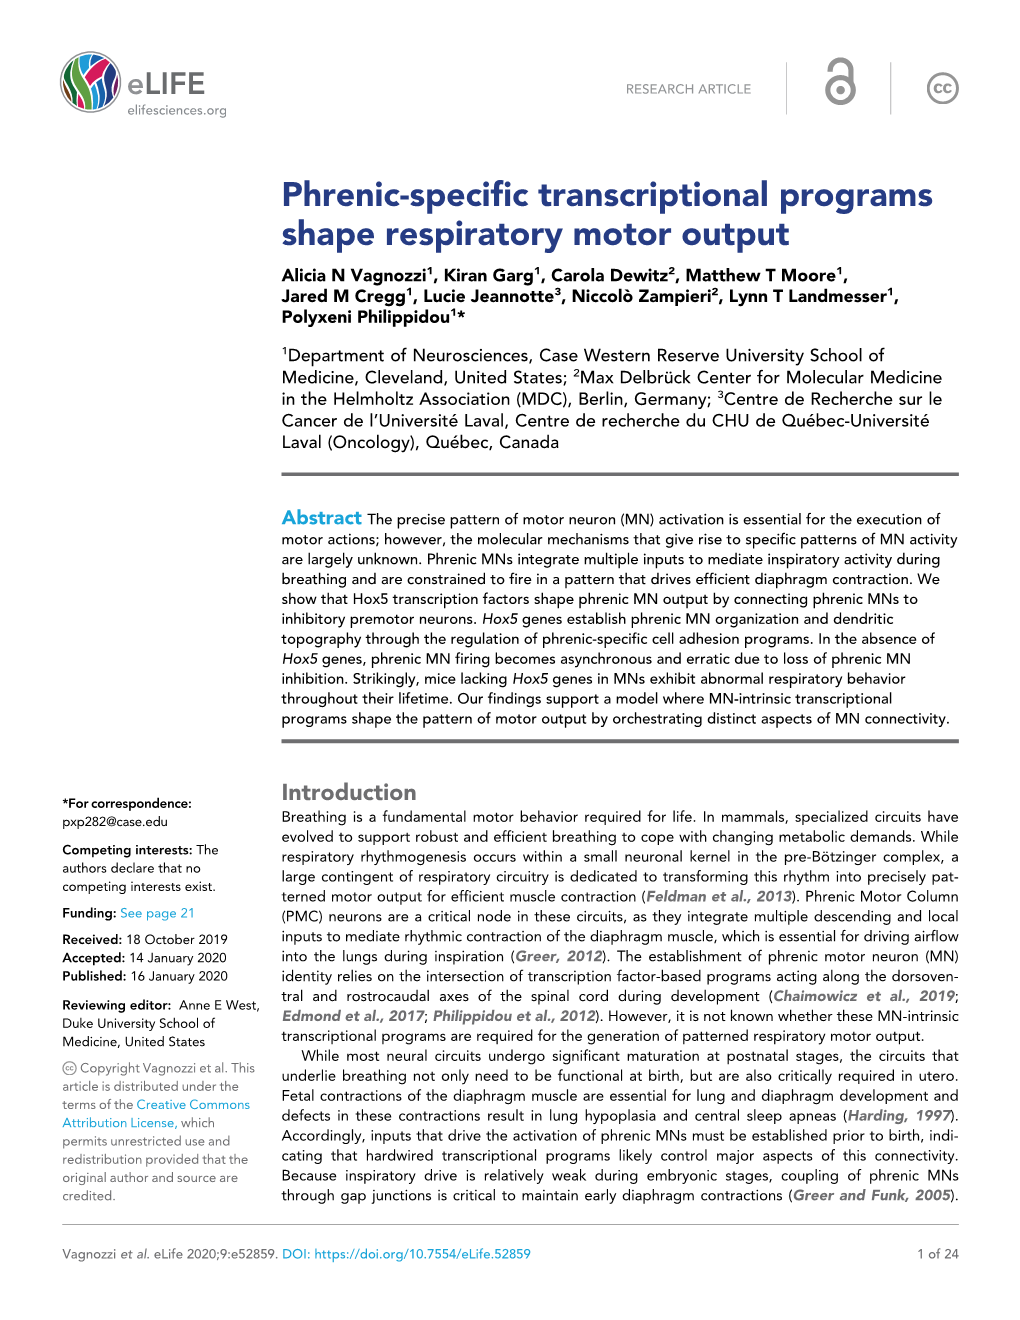 Phrenic-Specific Transcriptional Programs Shape Respiratory Motor